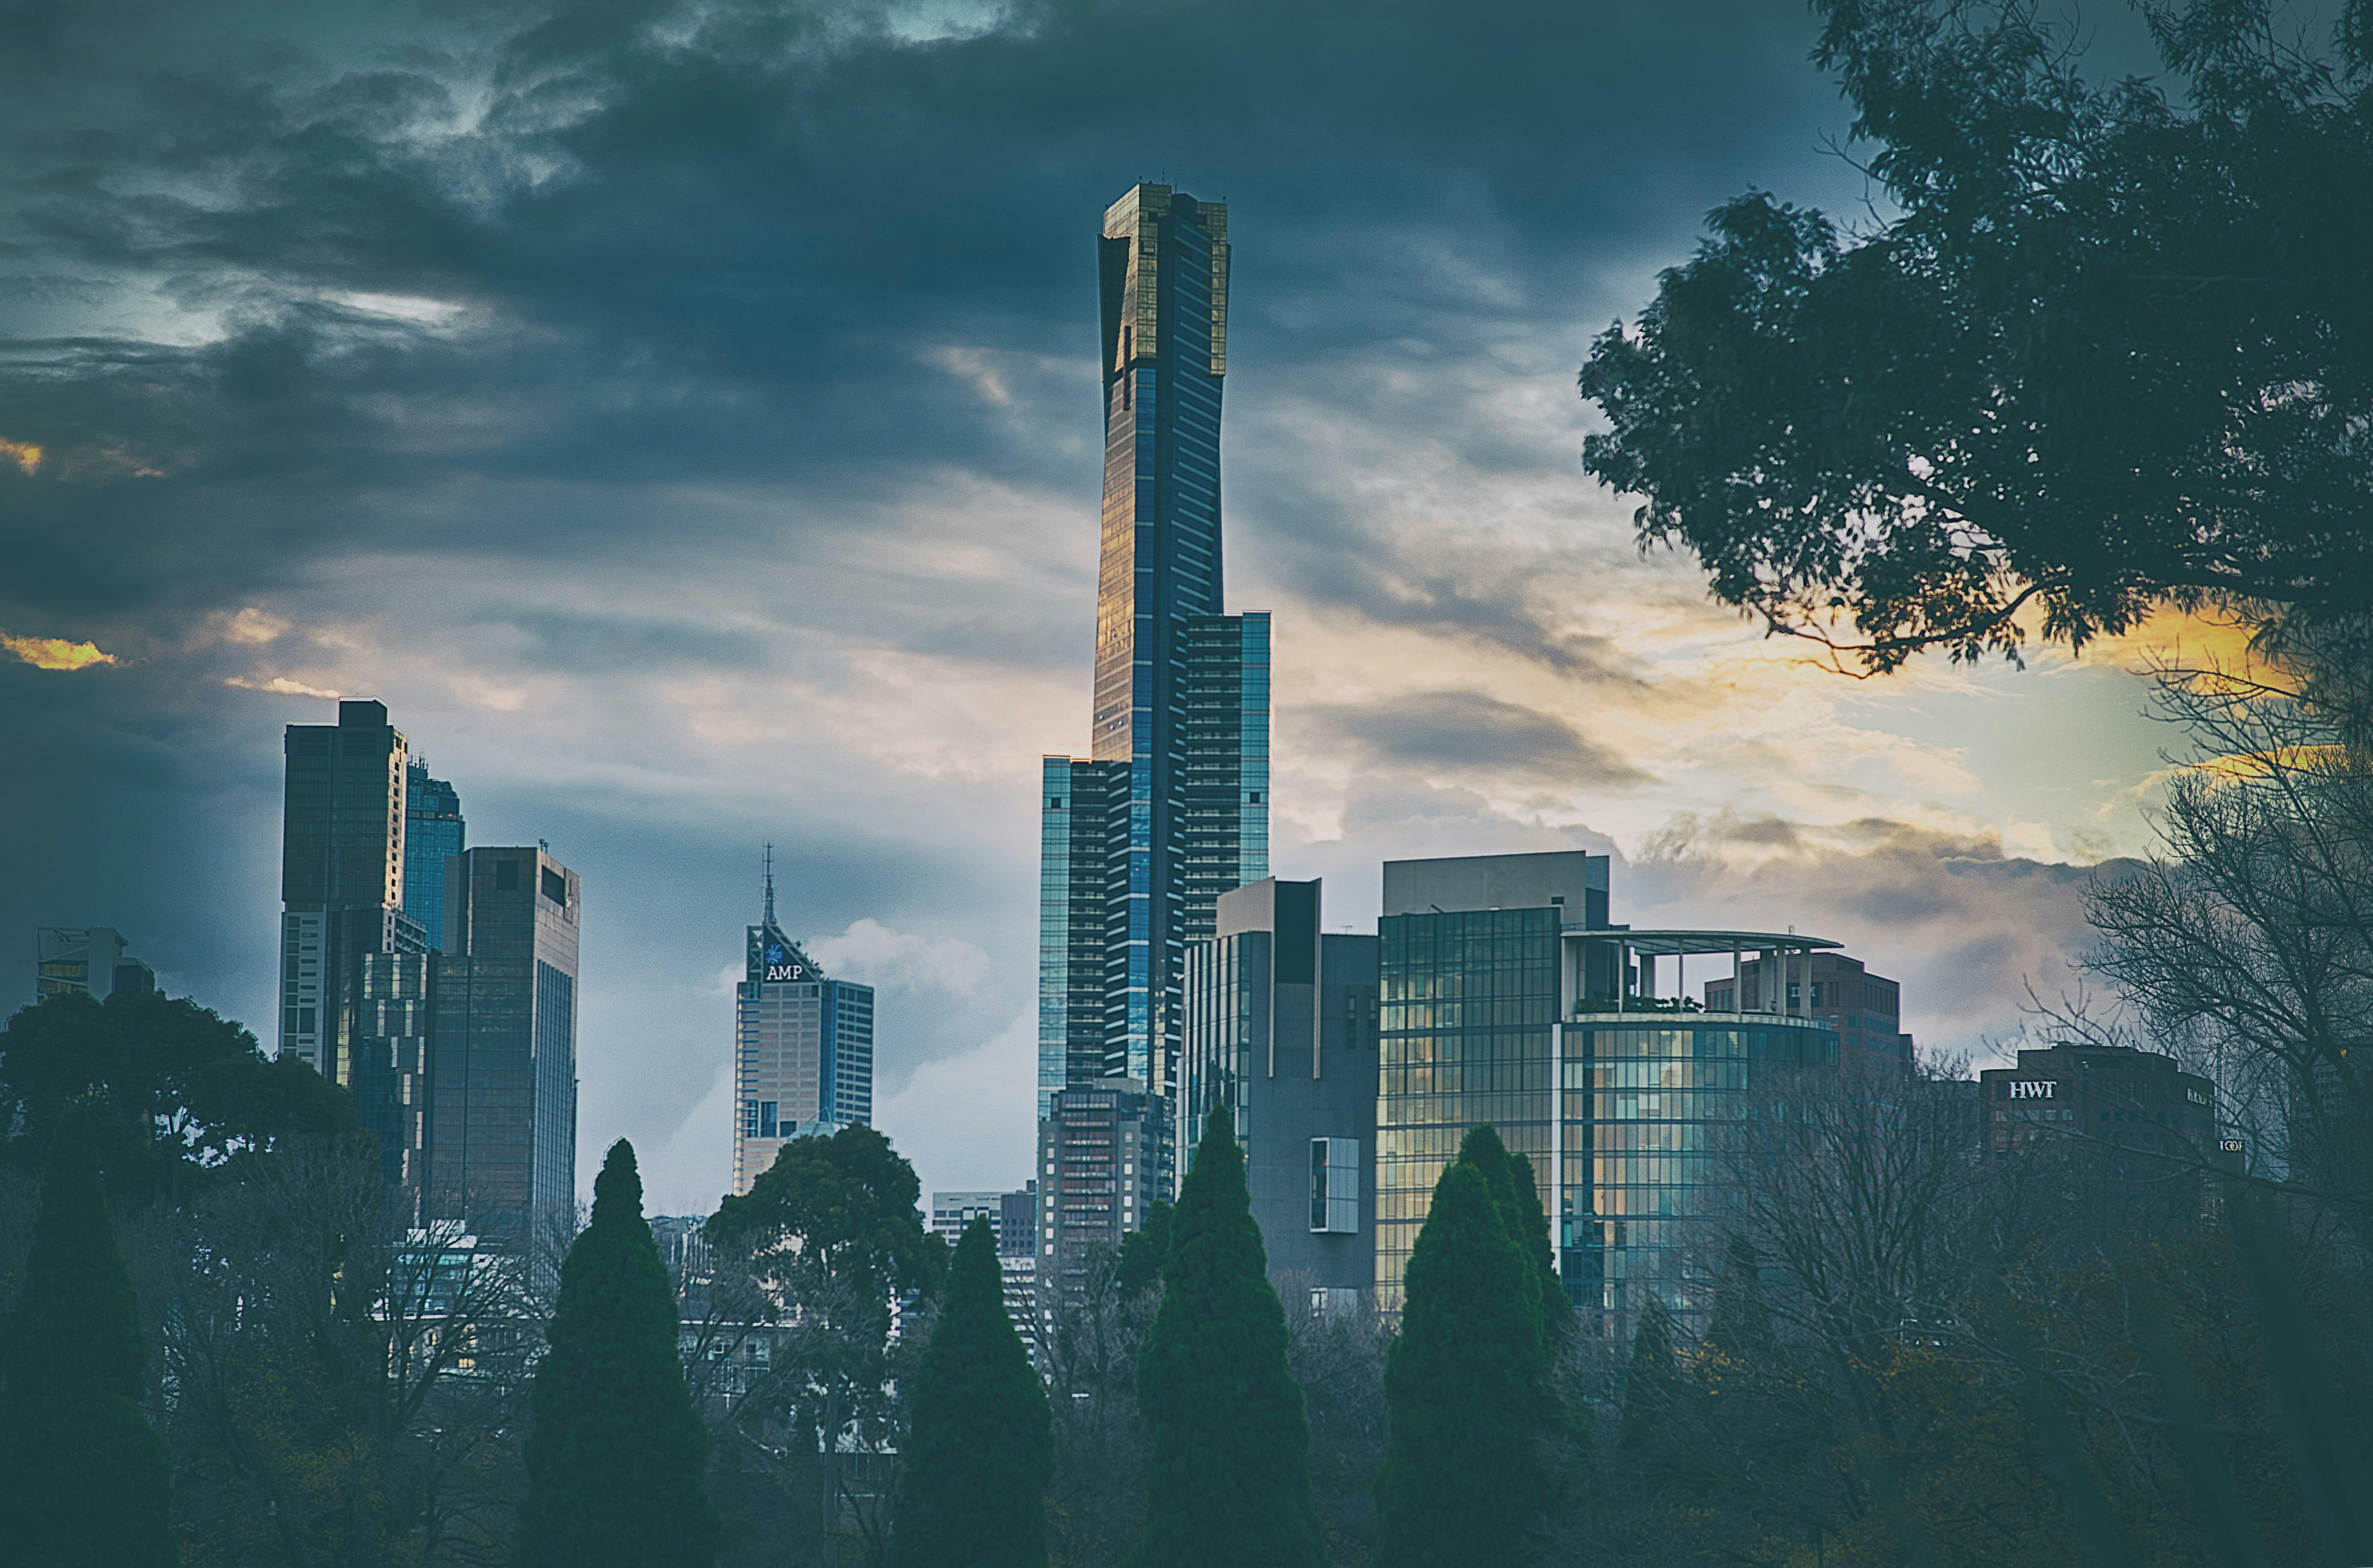 500 Melbourne Pictures Stunning  Download Free Images on Unsplash